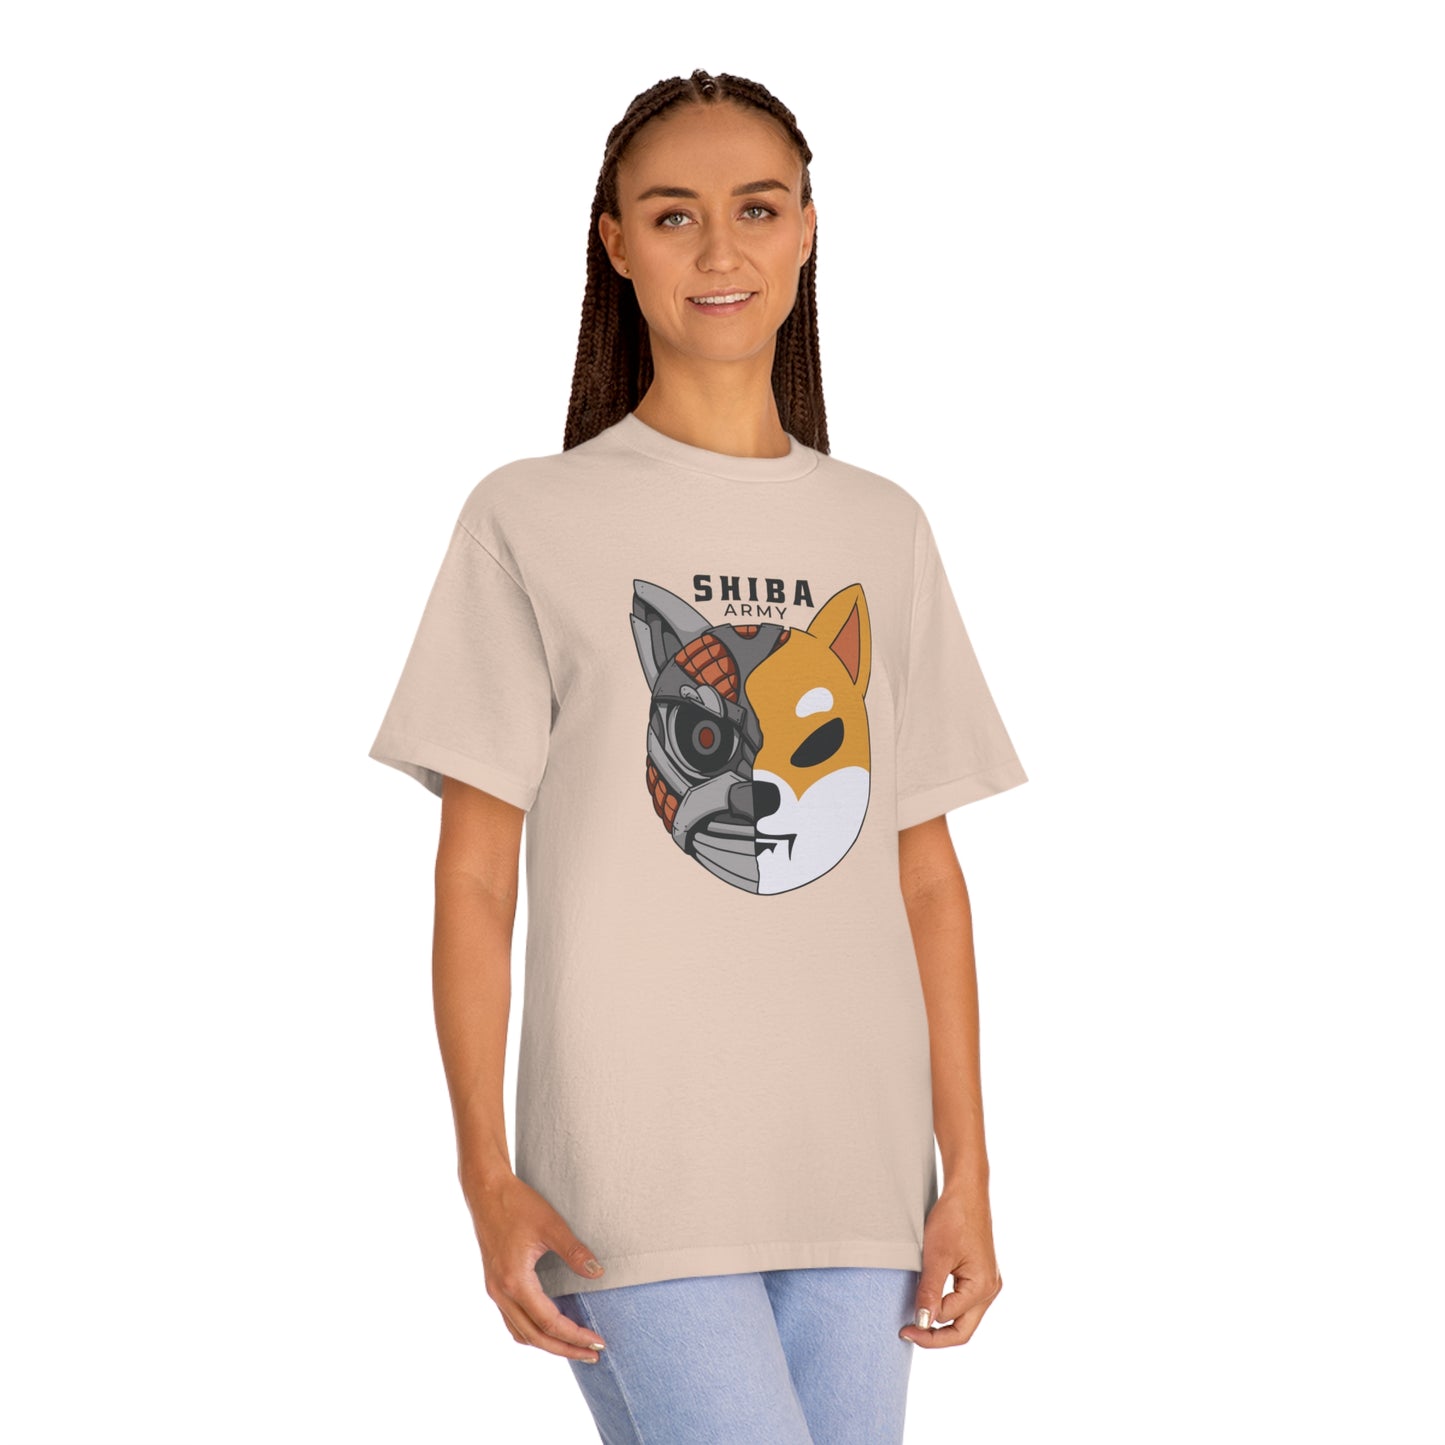 Unisex Classic Shiba Army Mechanical T-shirt